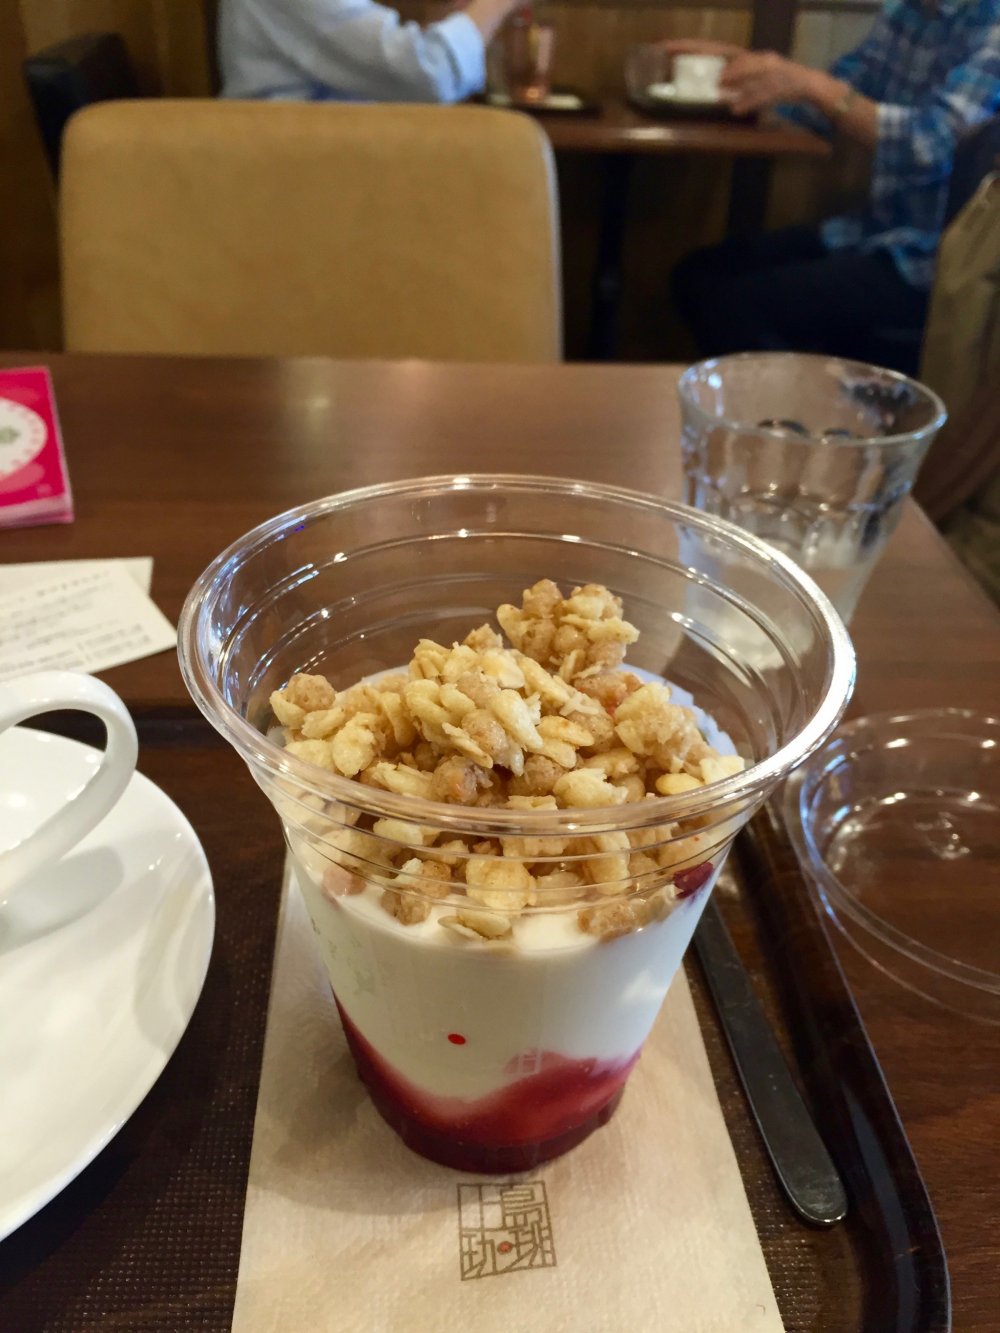 My fru-gra (fruit granola) yogurt